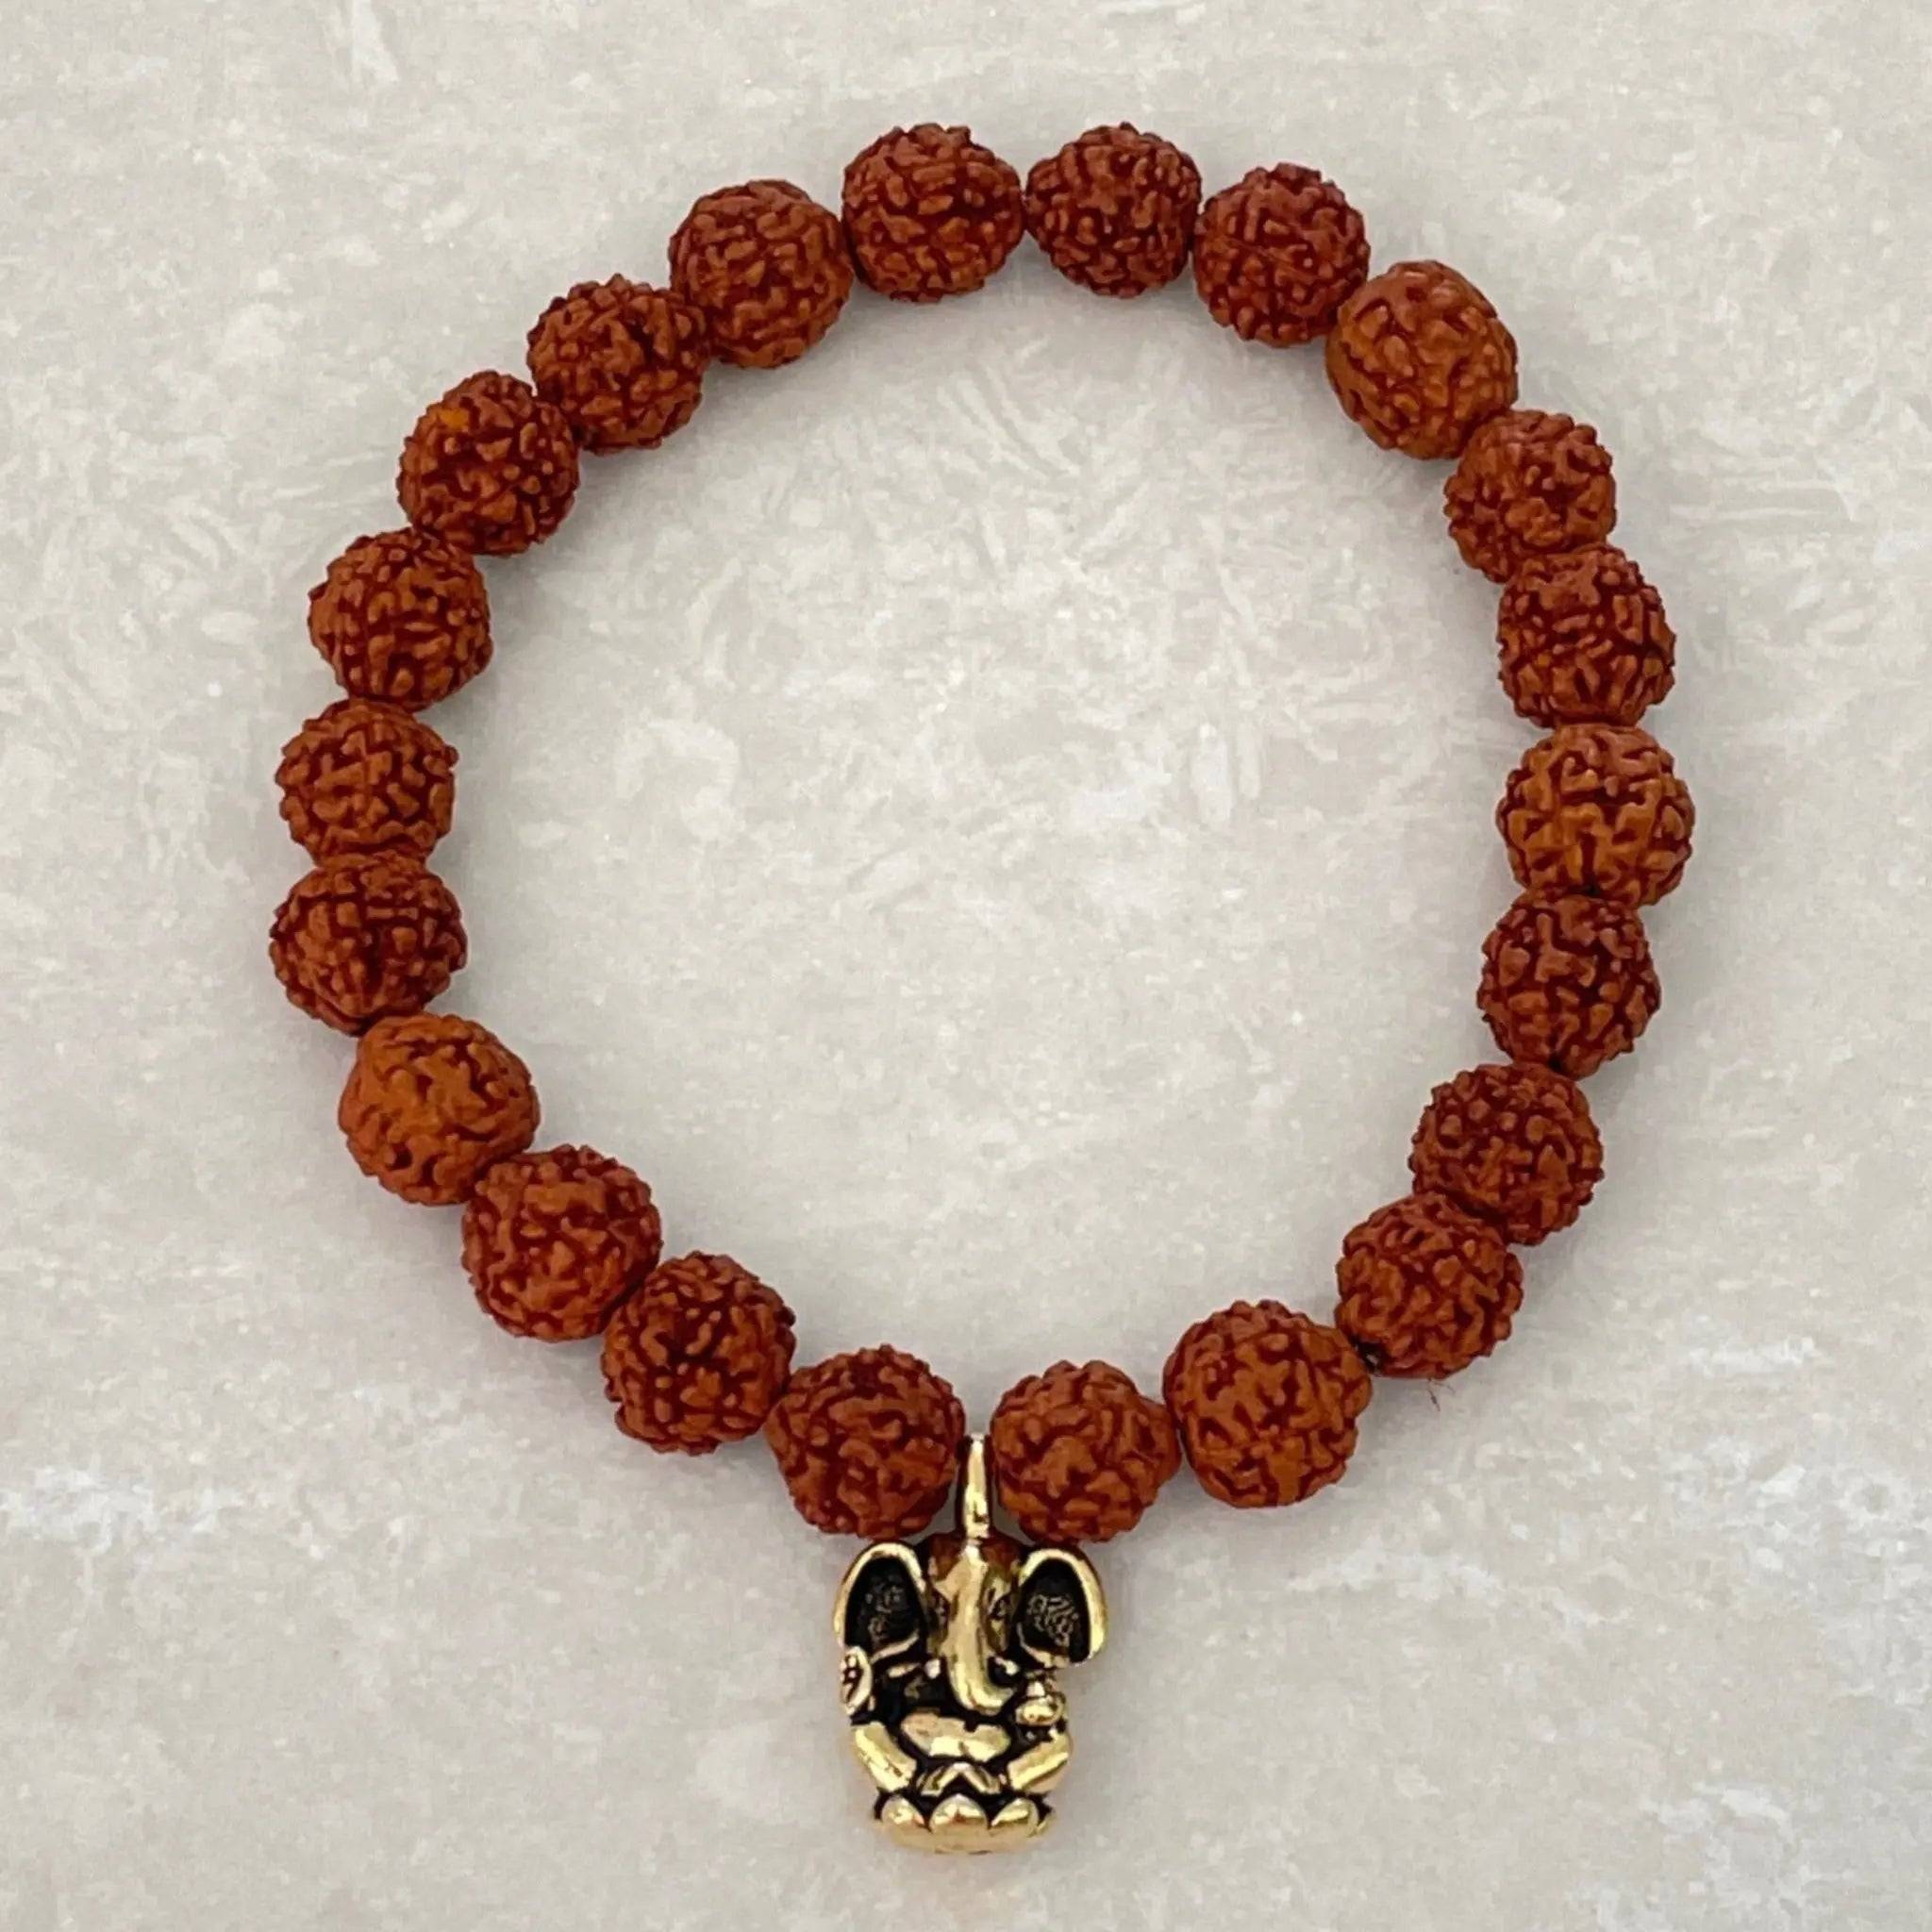 Devotion mala bracelet of Rudraksha mala beads and Carnelian